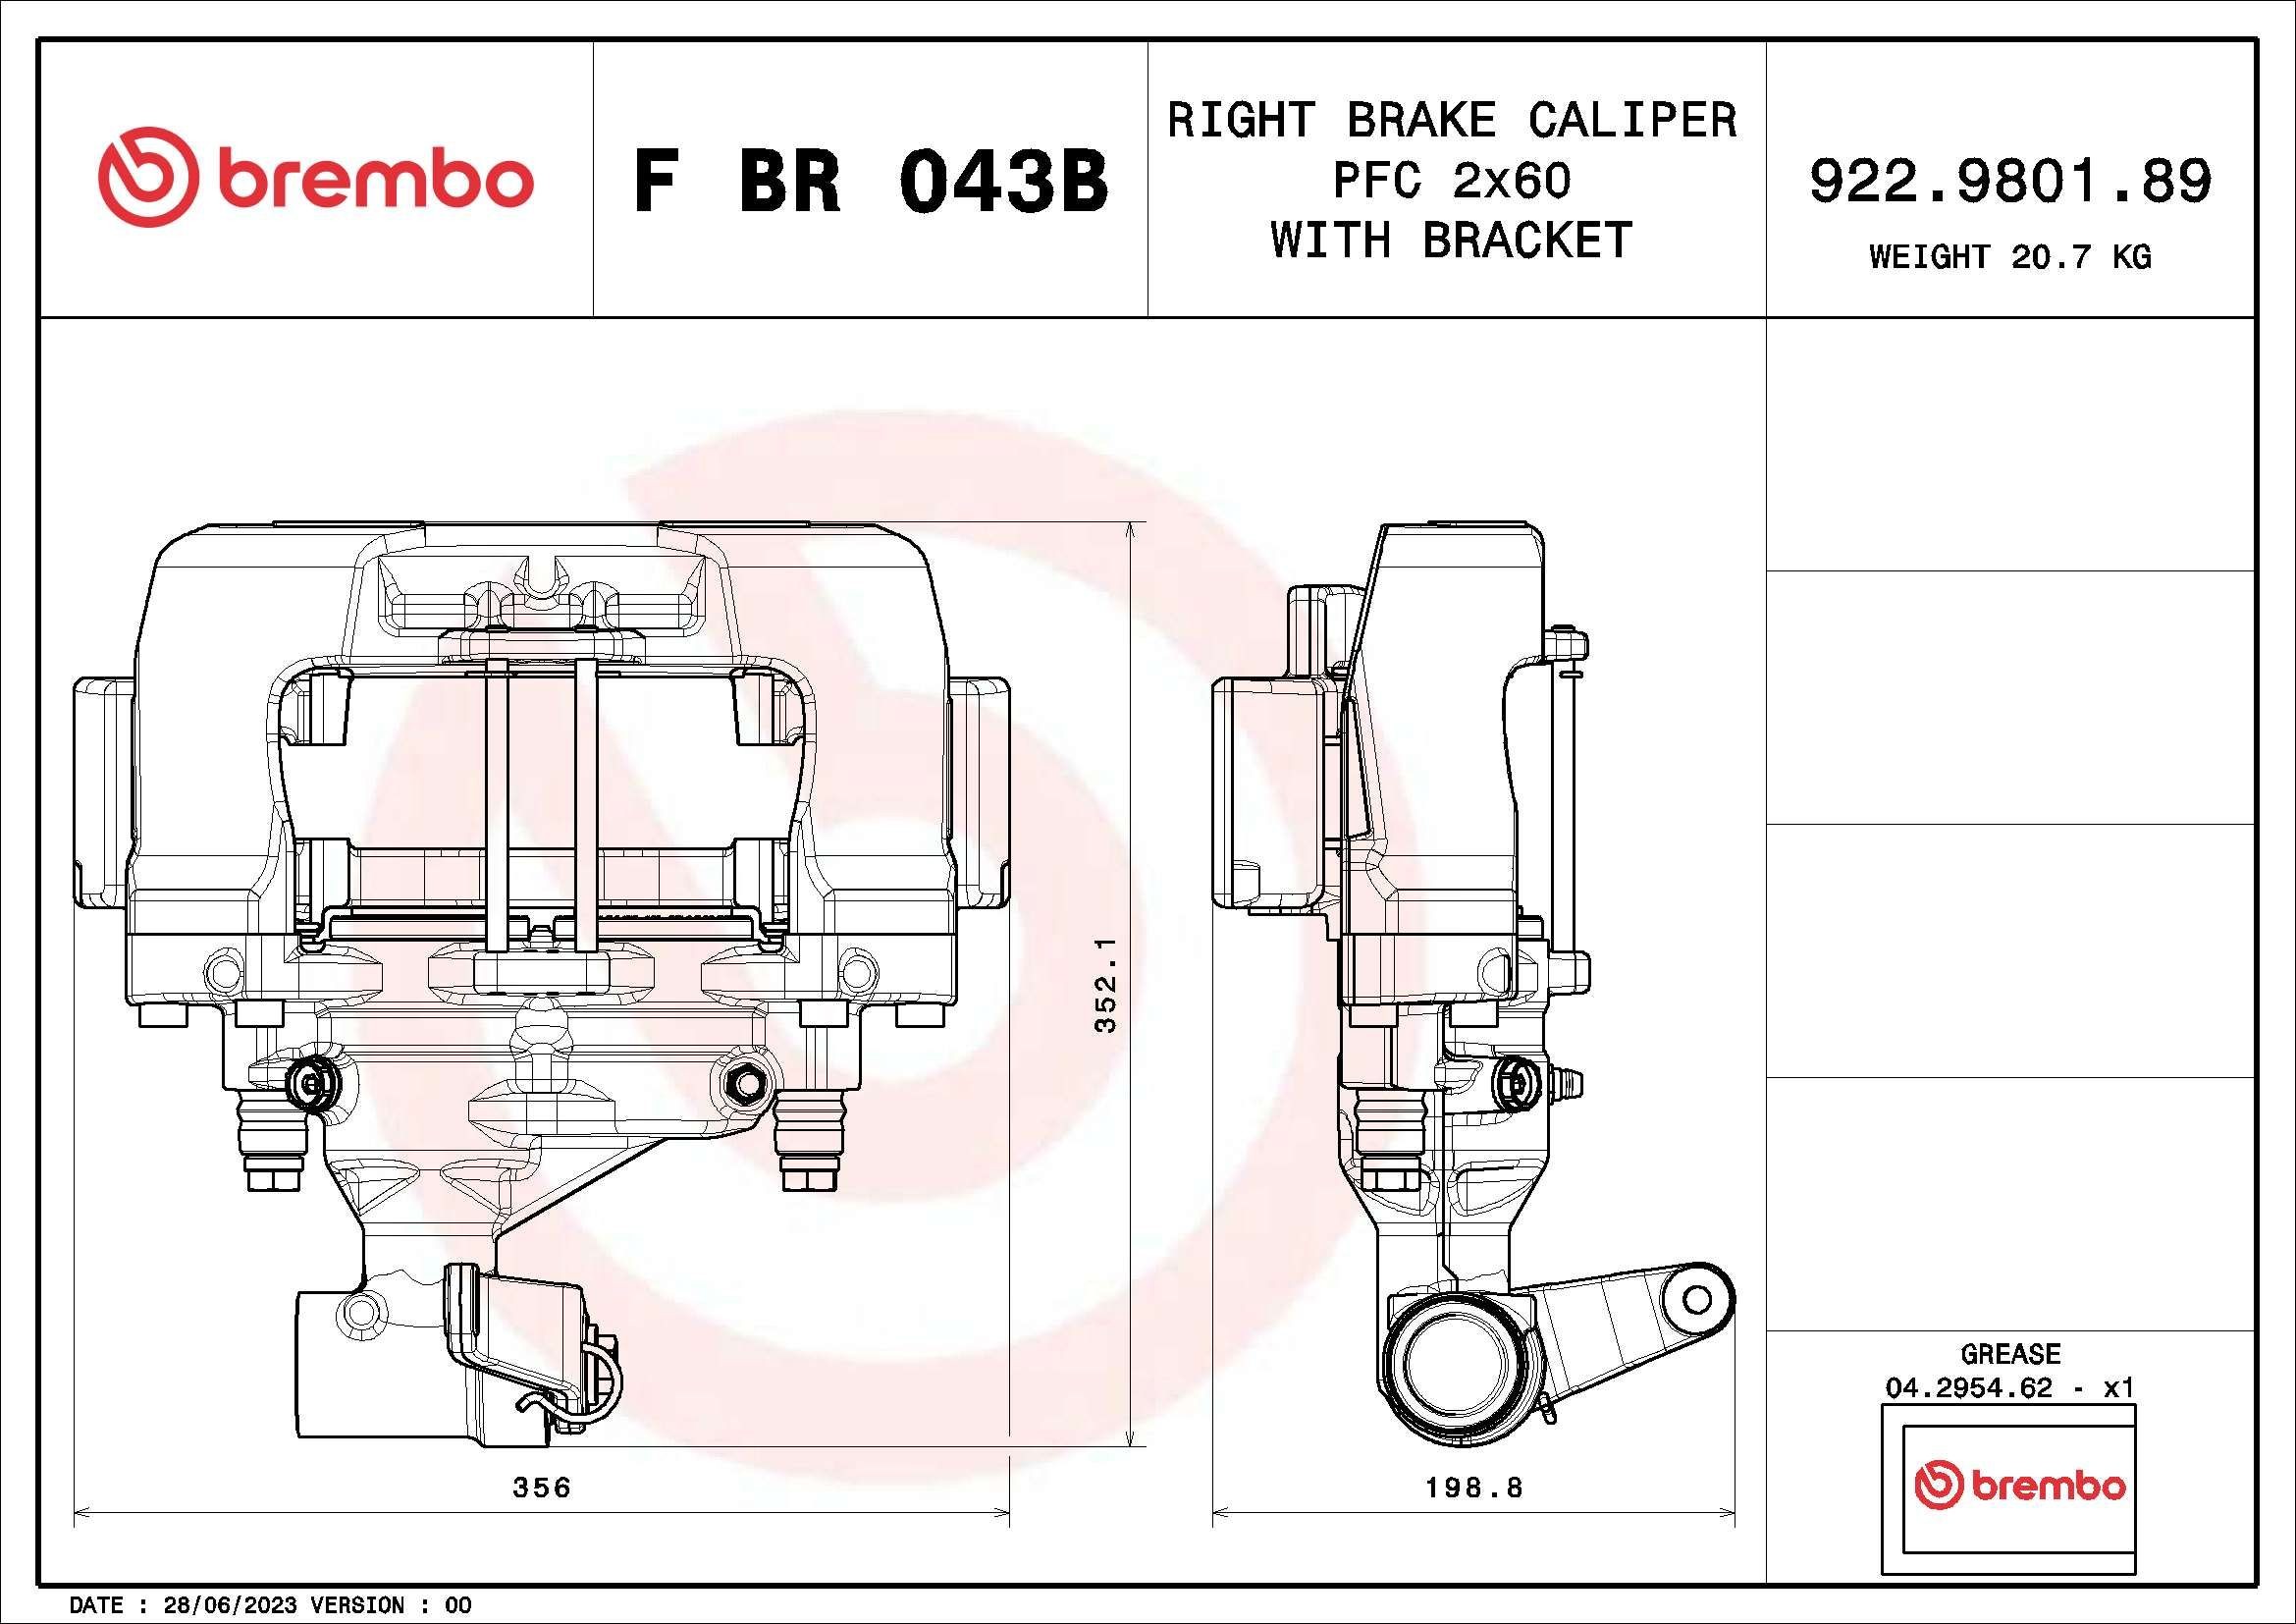 BREMBO Calipers F BR 043B